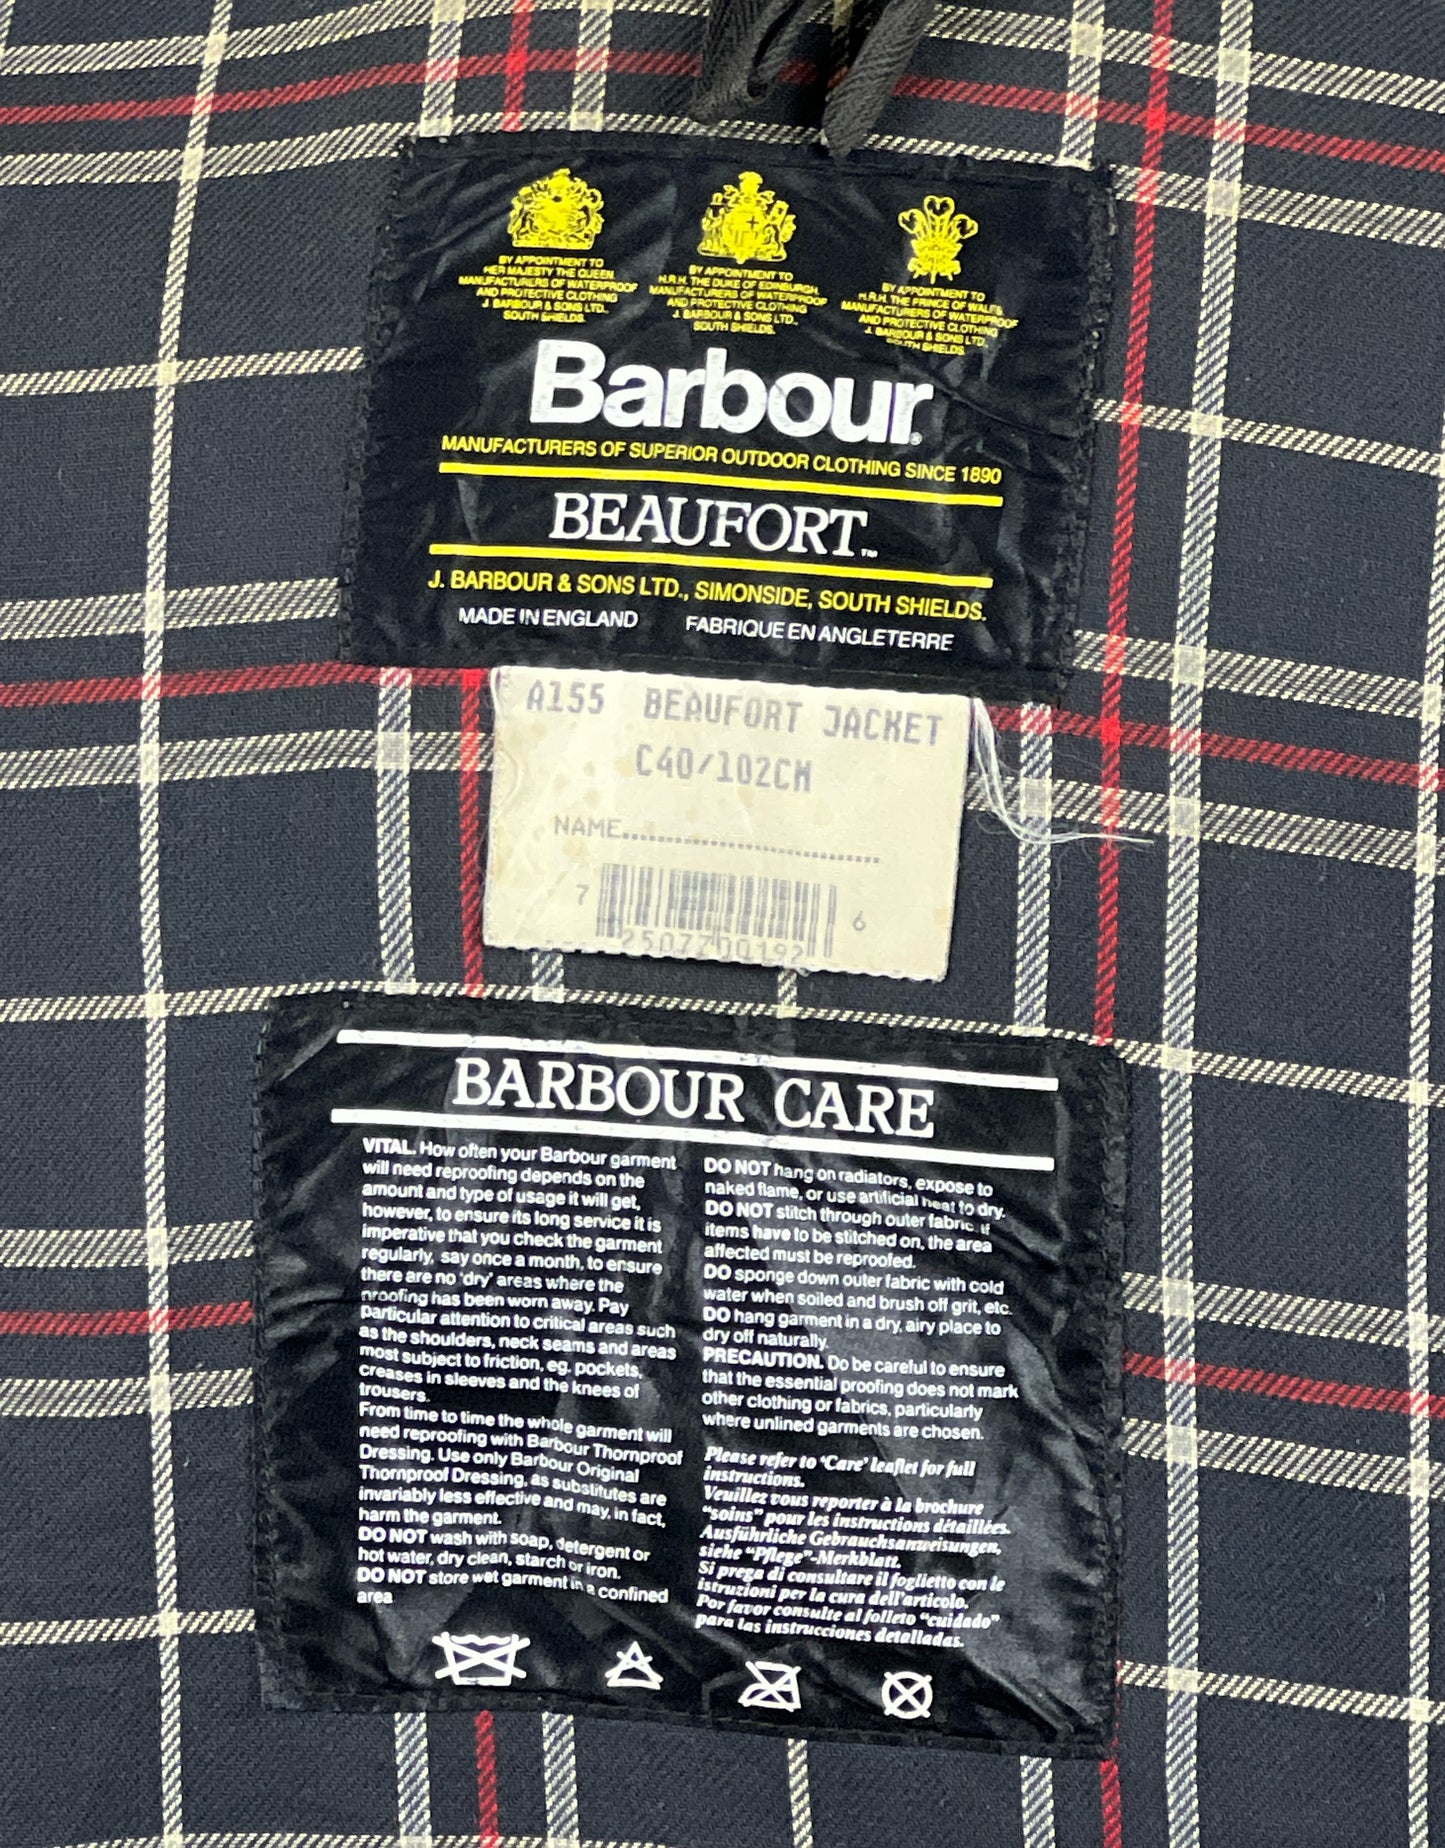 Barbour Giacca Beaufort blu C40/102 cm -Navy waxed Beaufort Jacket Size Medium